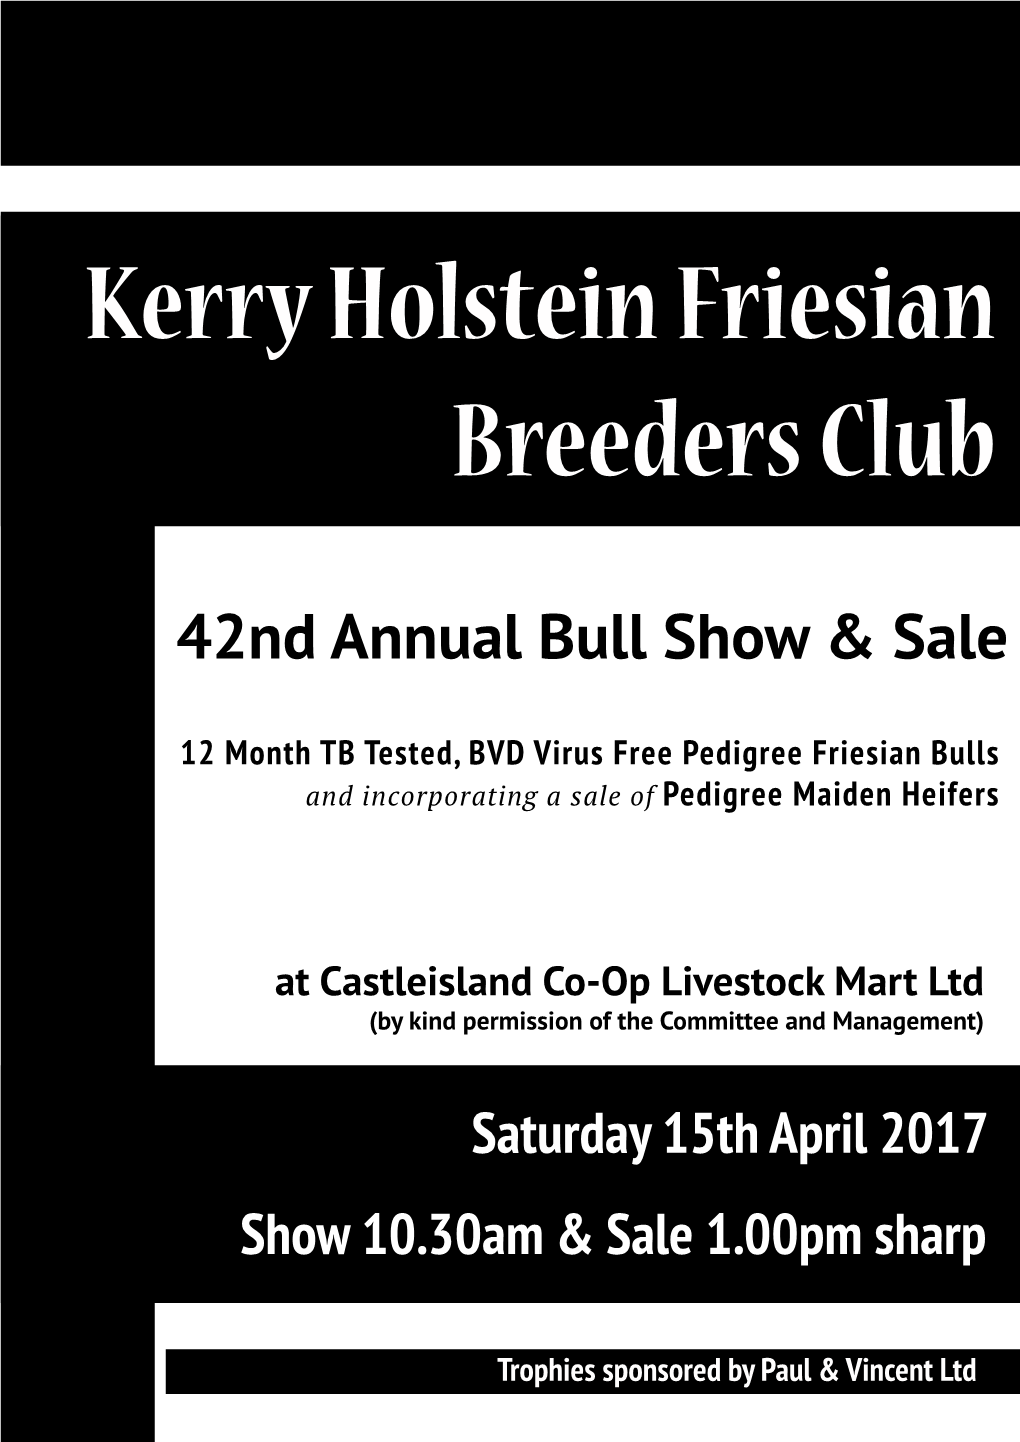 Kerry Holstein Friesian Breeders Club